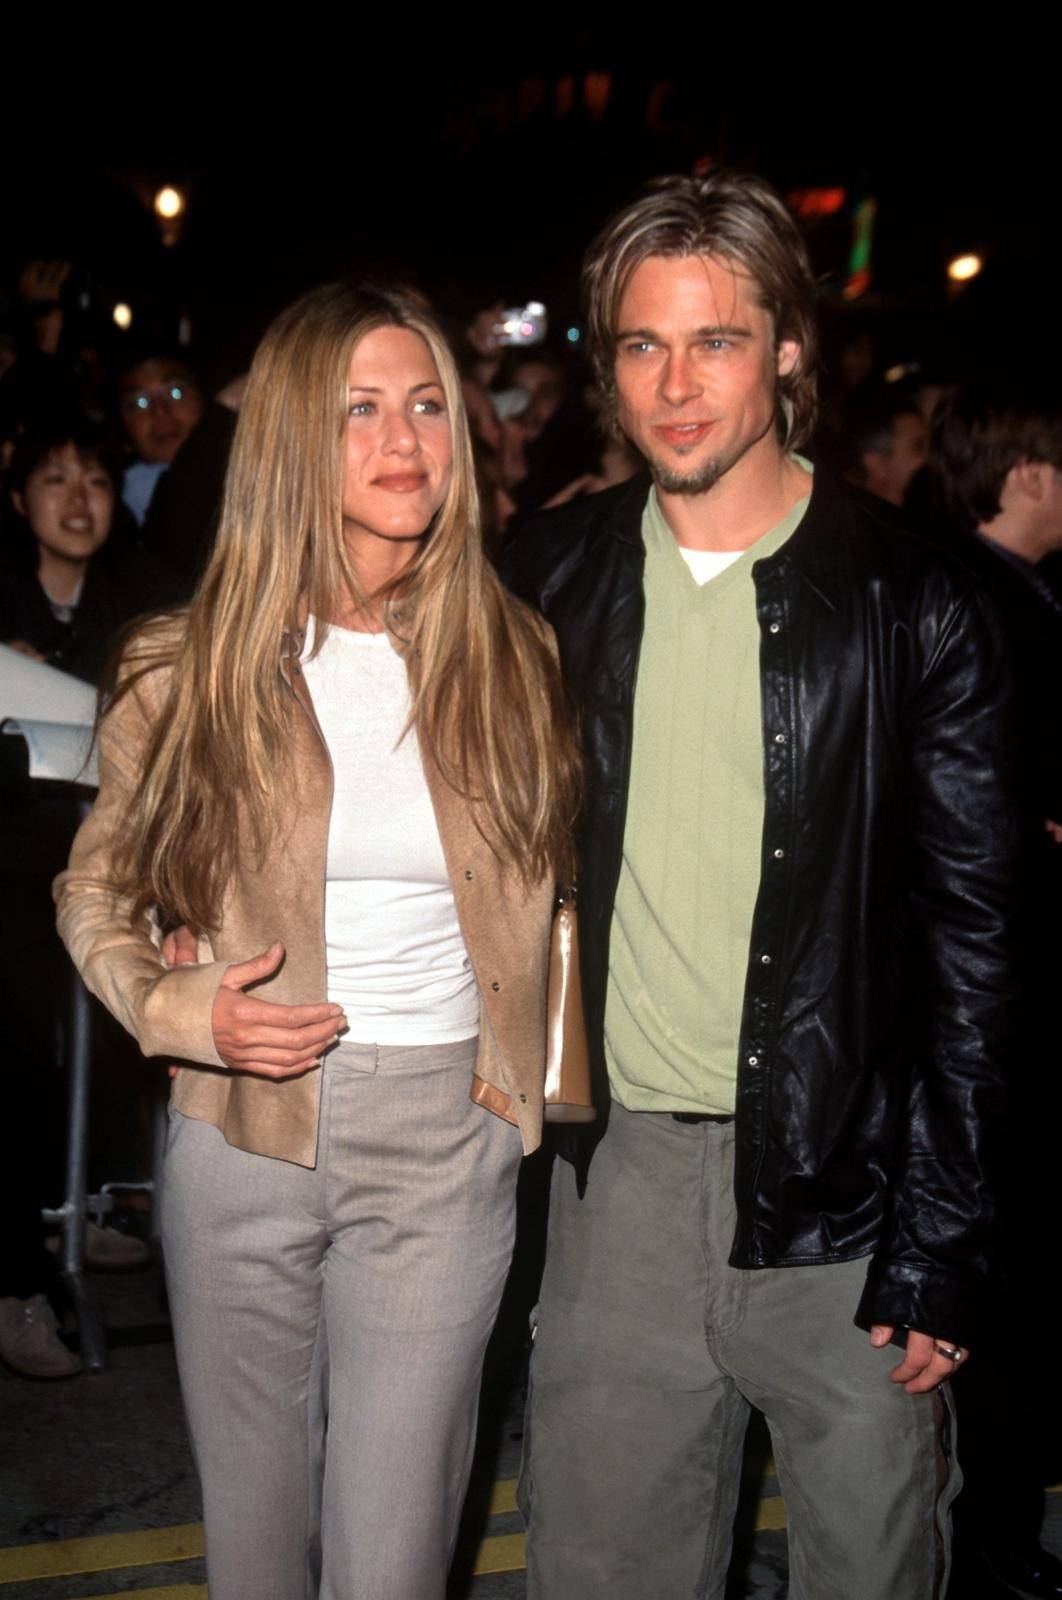 Brad Pitt and Jennifer Aniston allegedly broke up